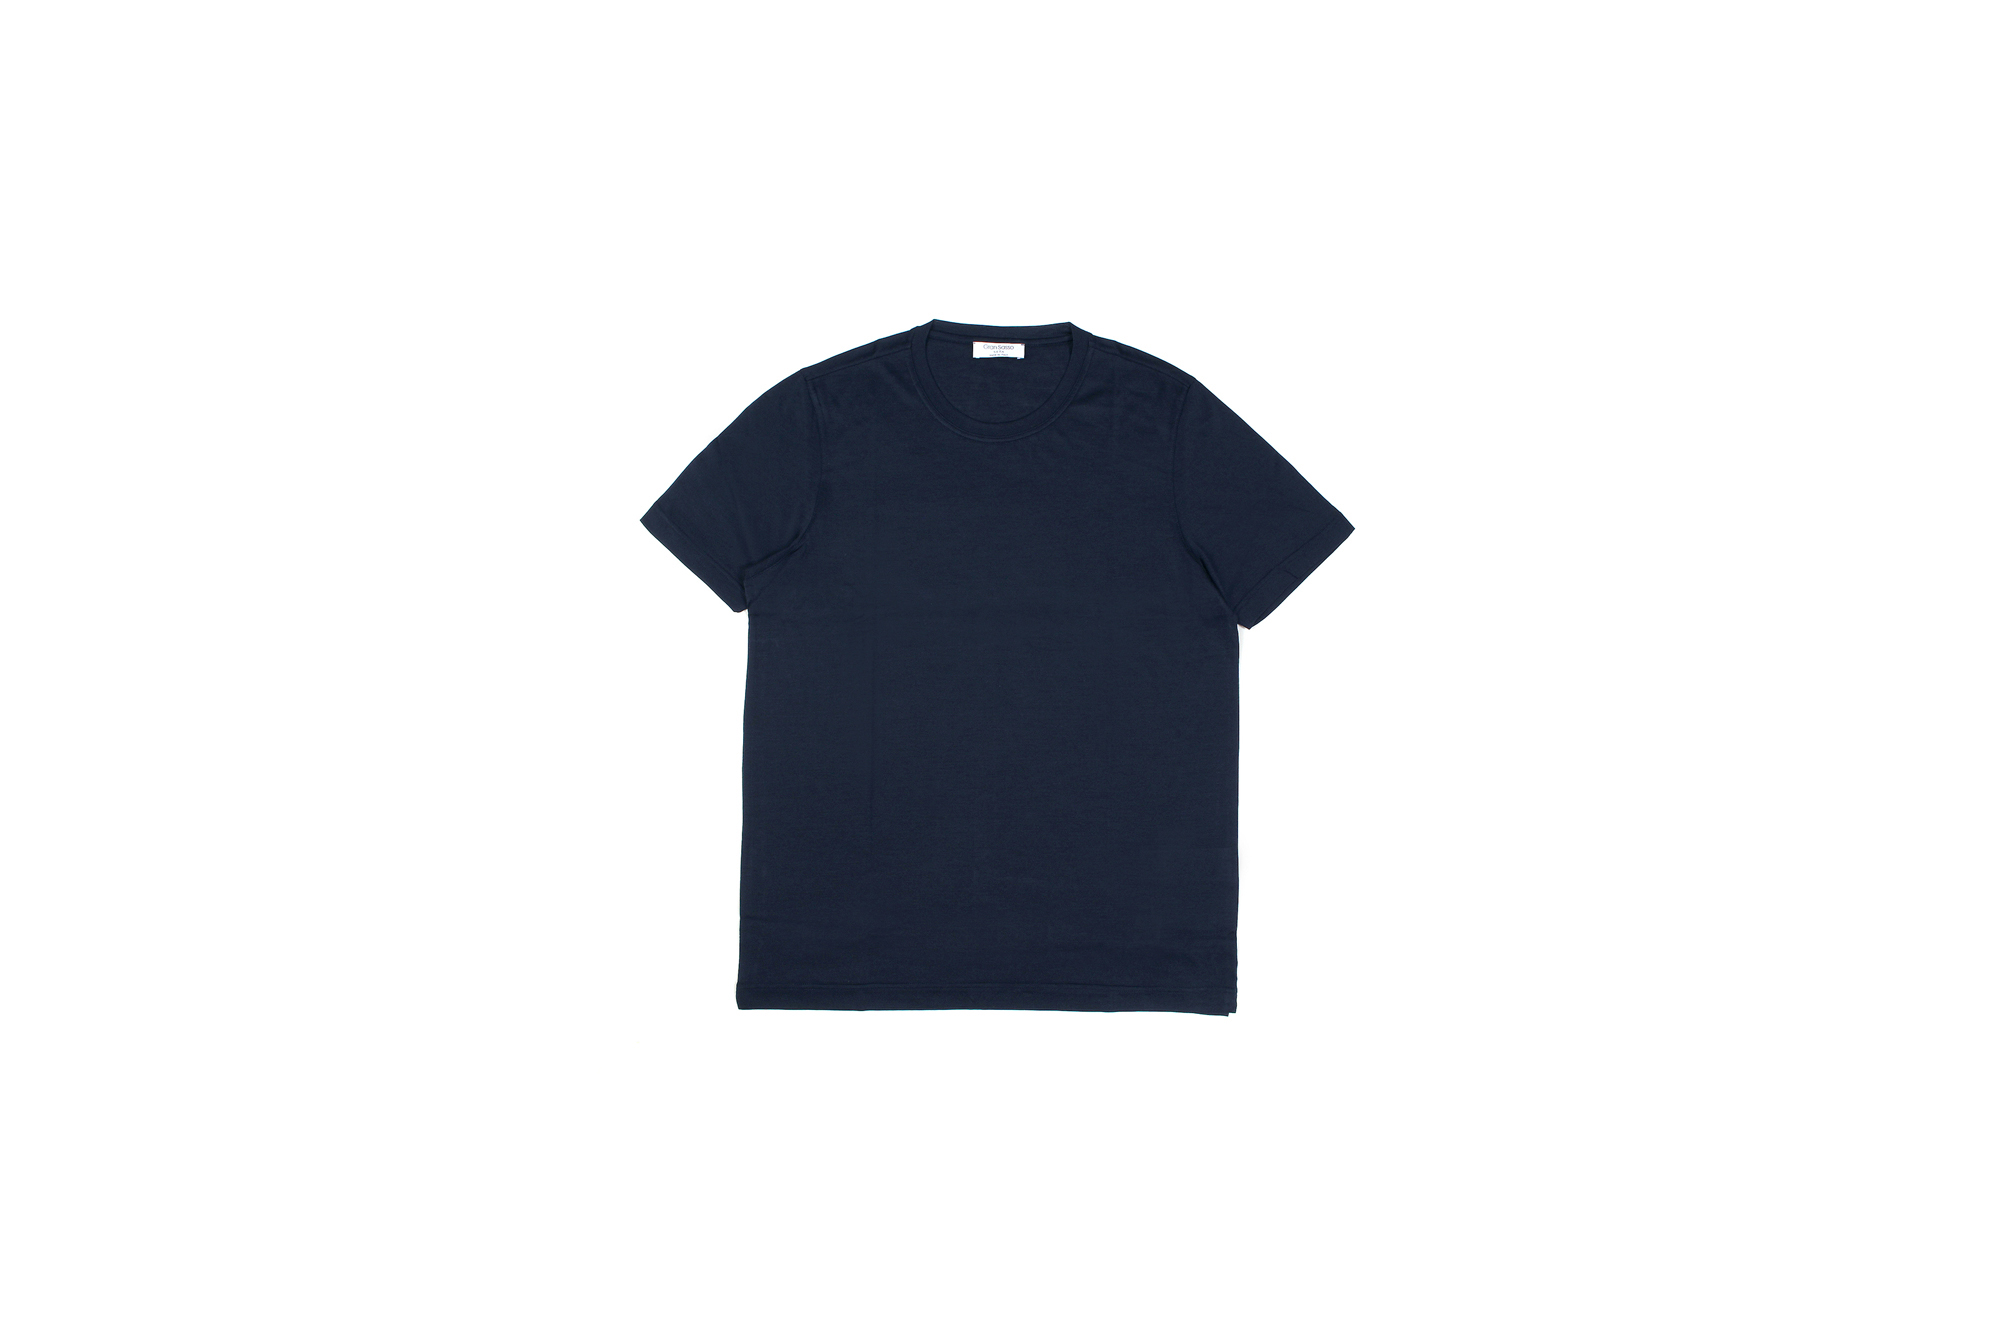 Gran Sasso (グランサッソ) Silk T-shirt (シルク Tシャツ) SETA (シルク 100%) ショートスリーブ シルク Tシャツ NAVY (ネイビー・308) made in italy (イタリア製) 2020 春夏新作 愛知 名古屋 altoediritto アルトエデリット